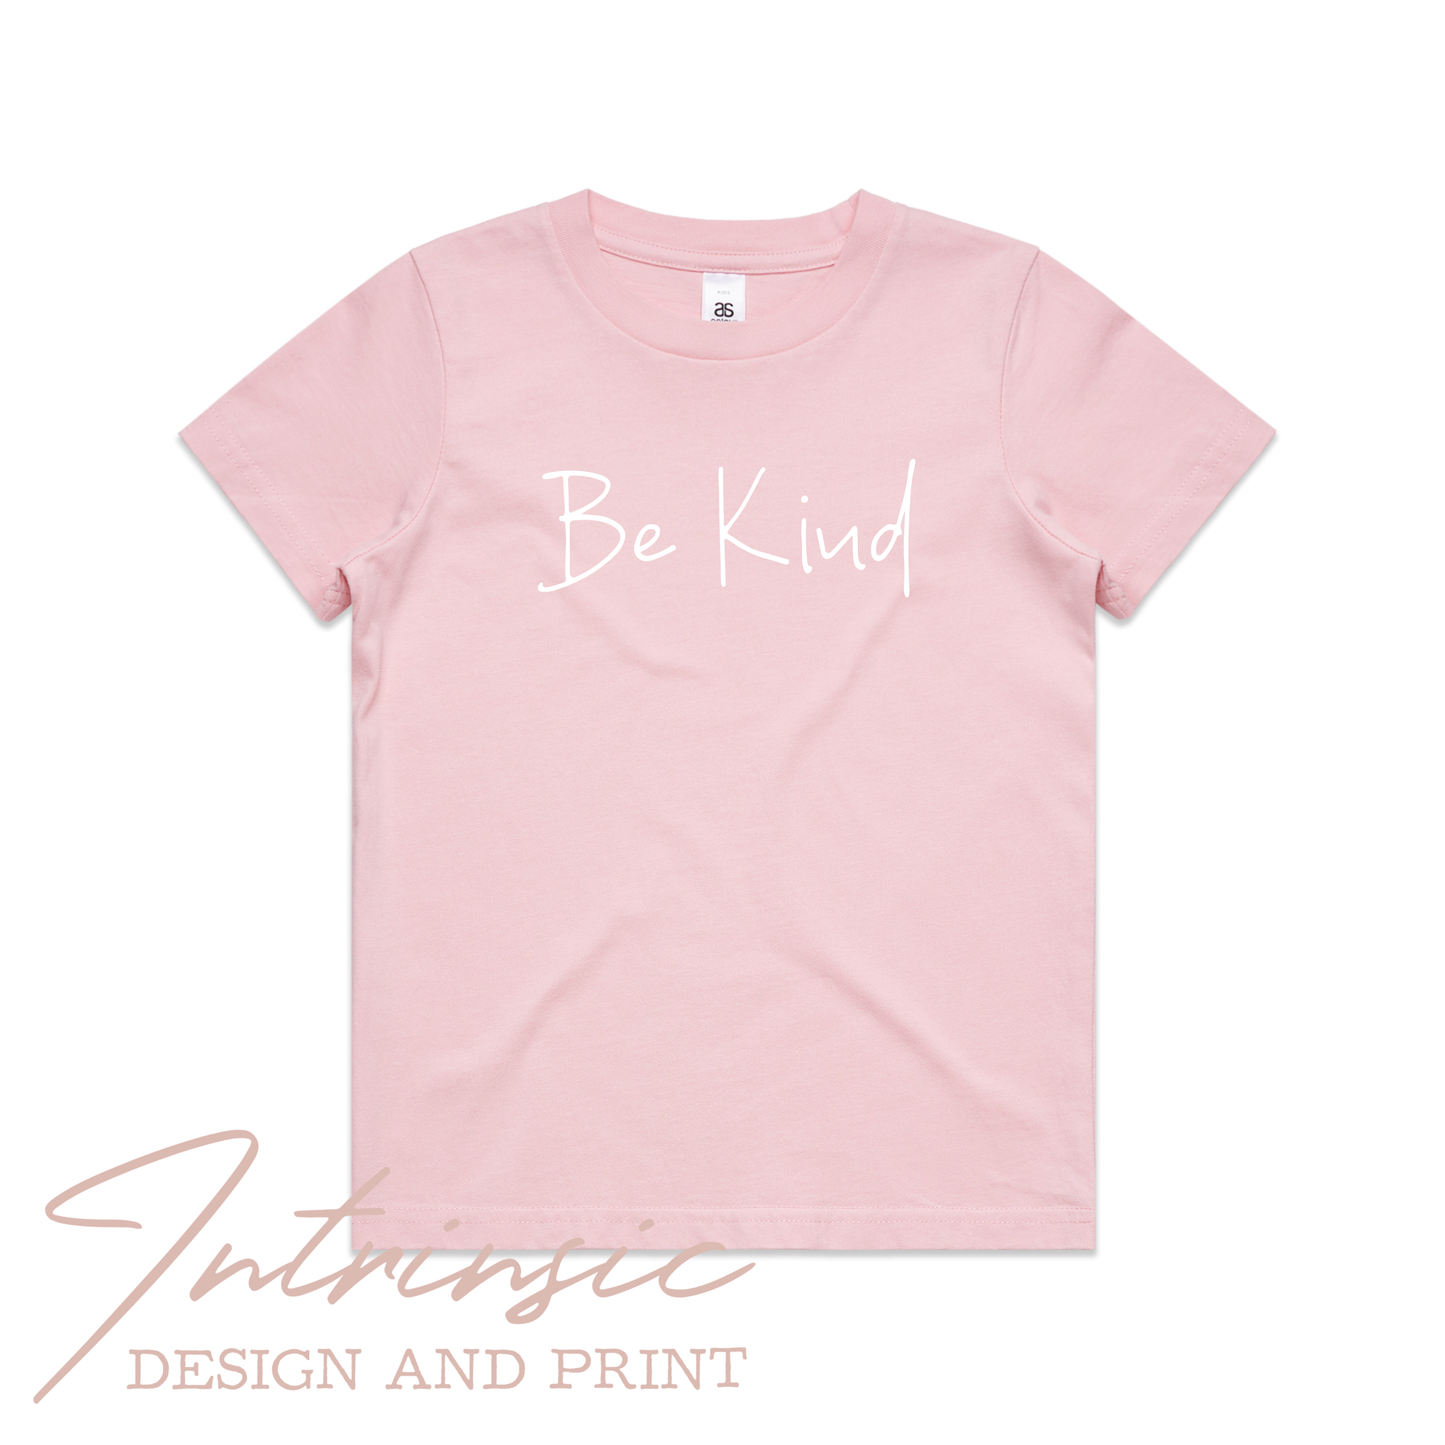 Be kind - kids tee